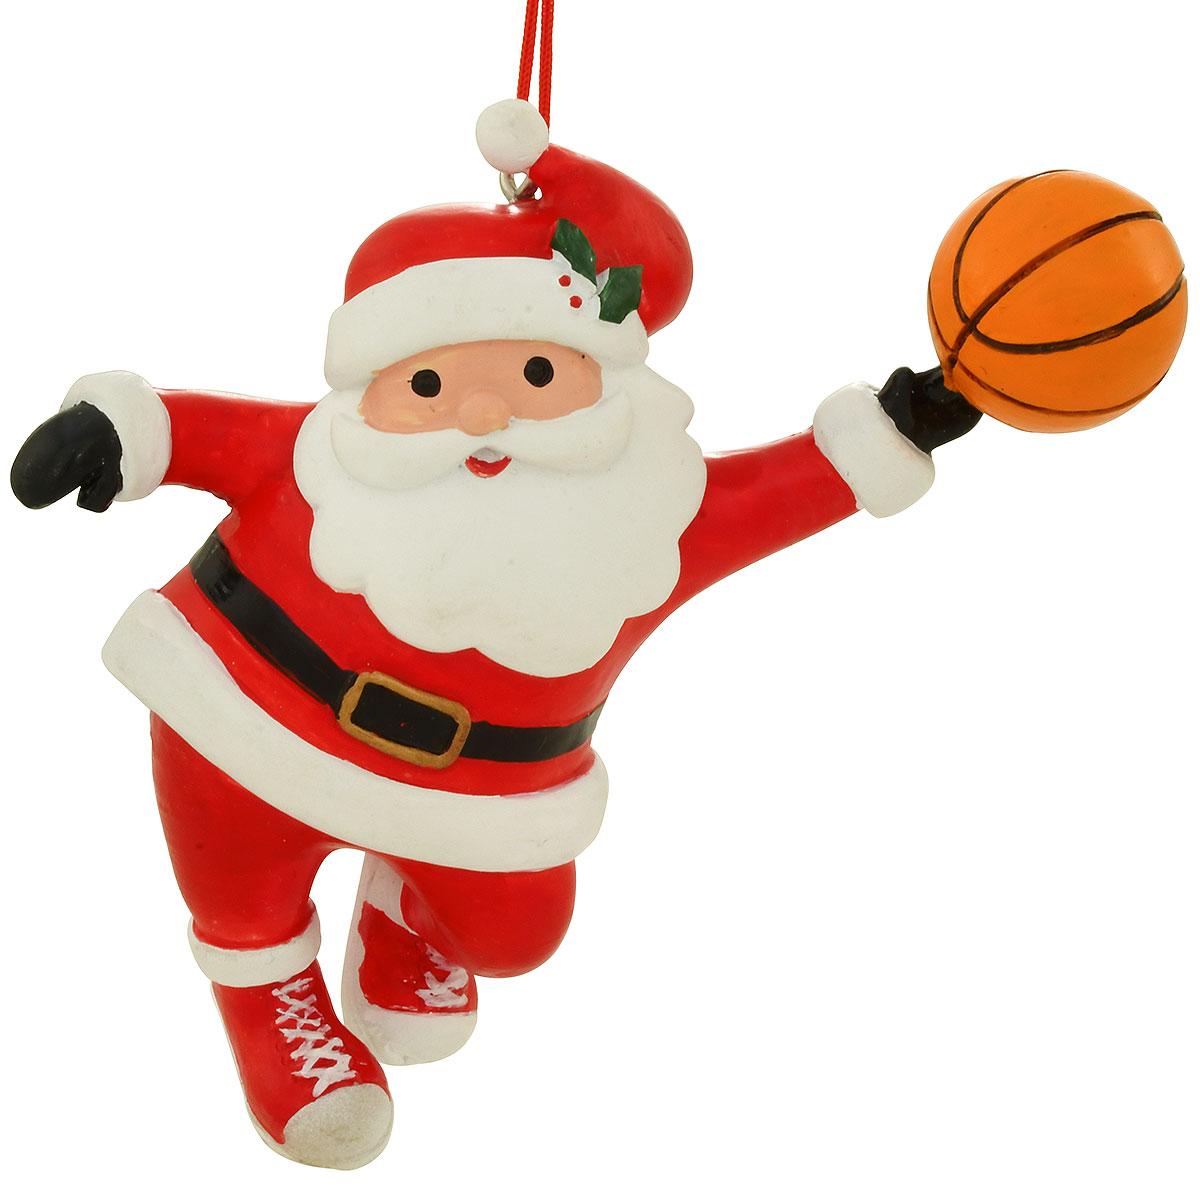 Santa basketball player ornament